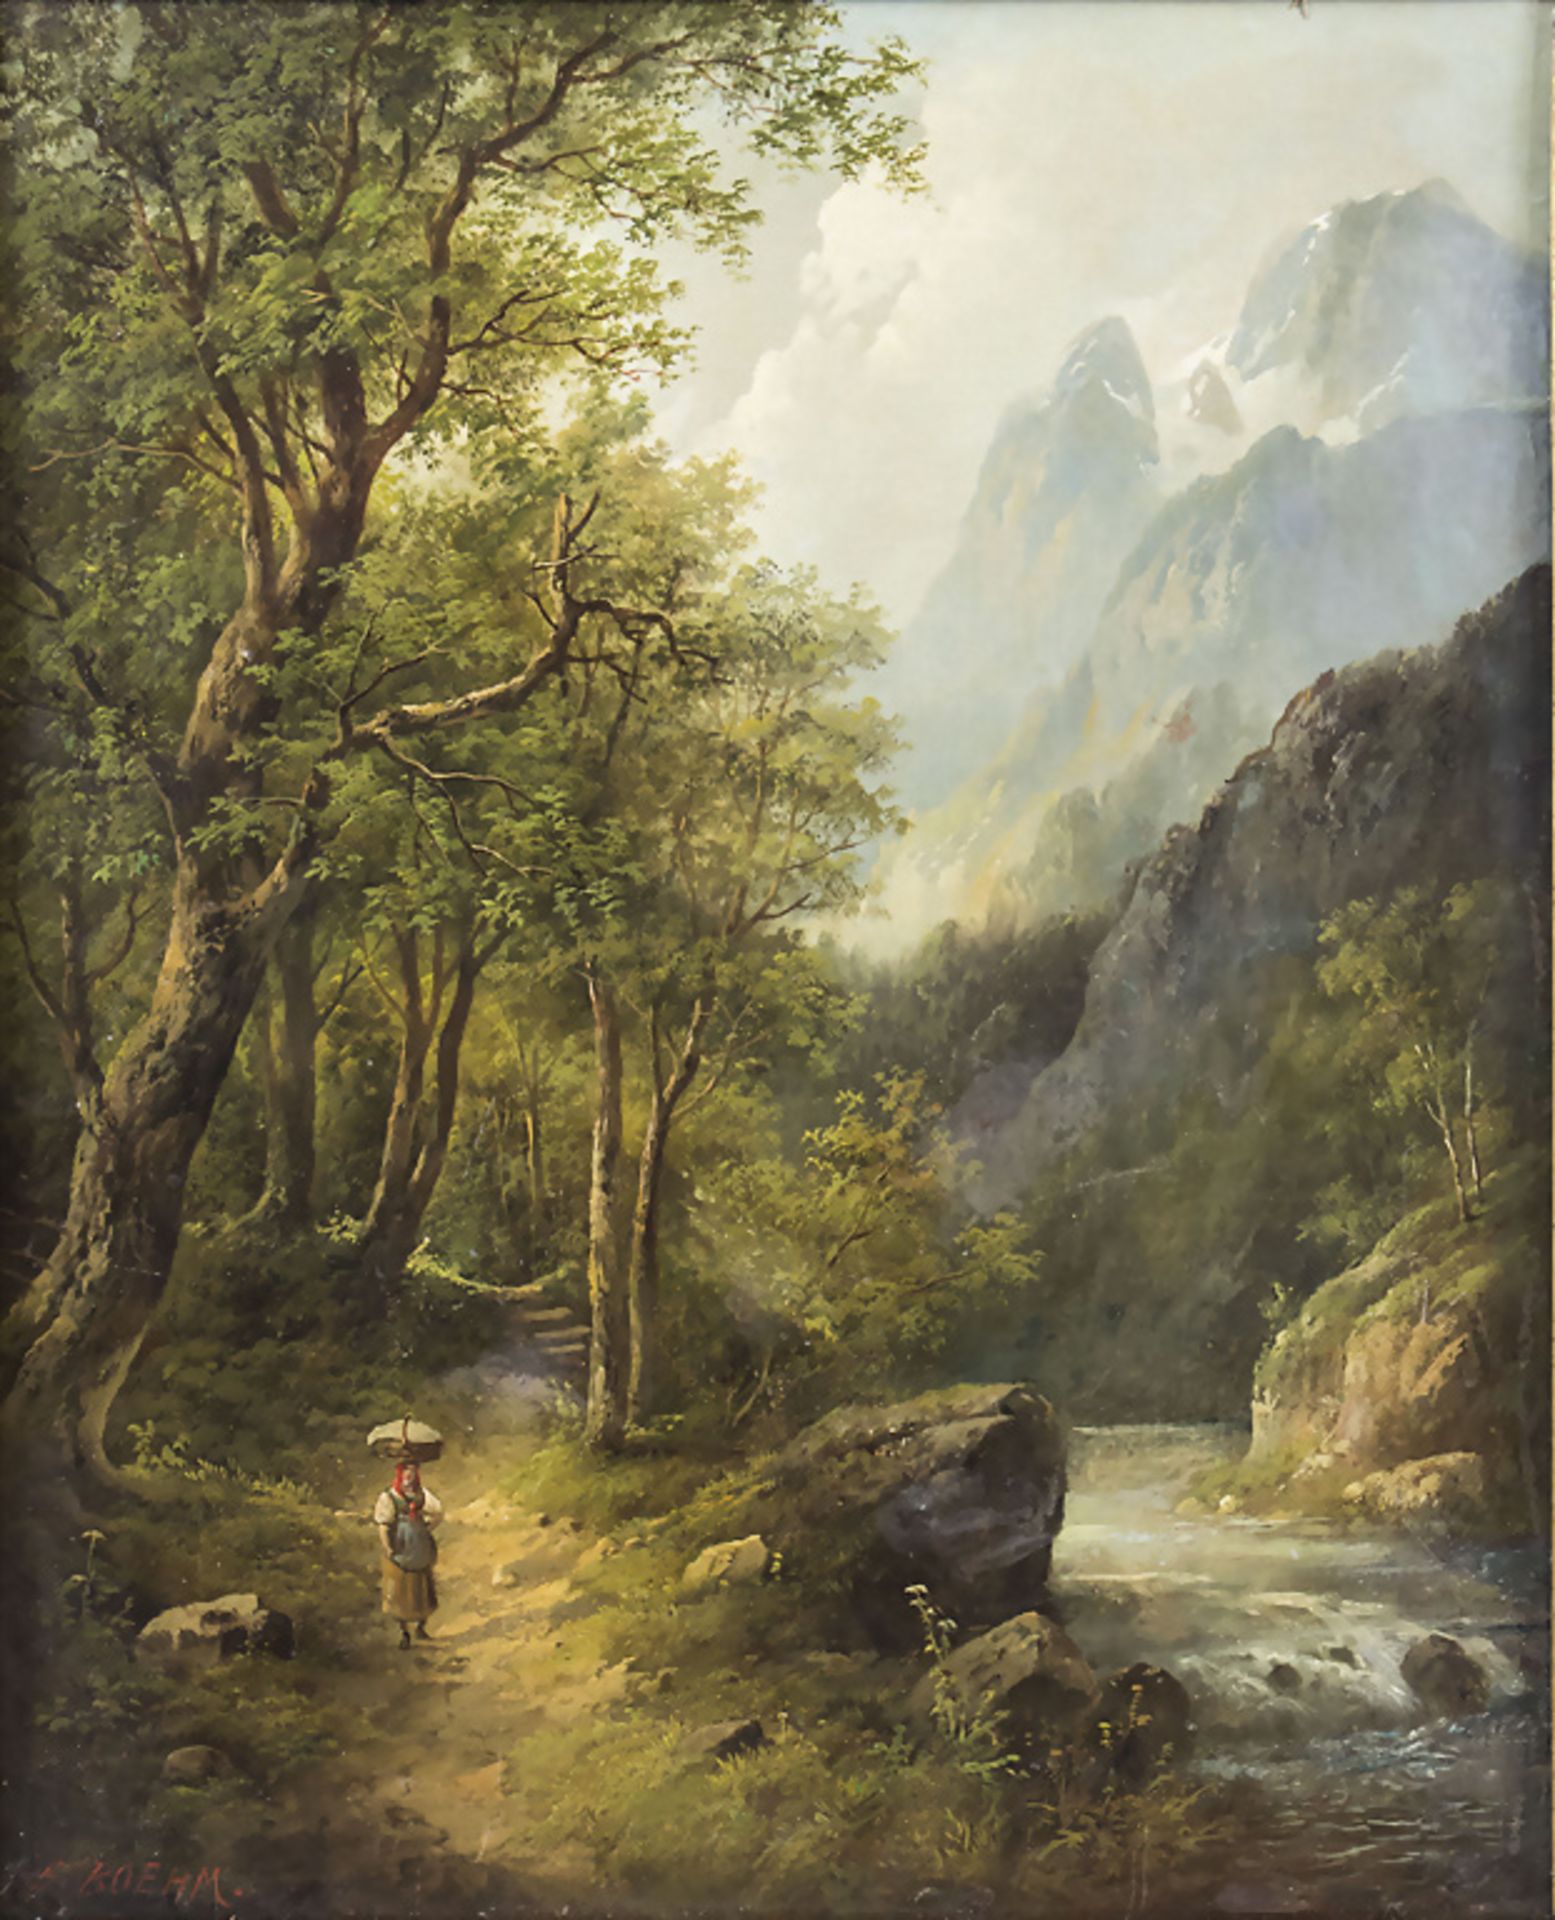 Eduard BÖHM (1830-1890), 'Waldlandschaft mit Alpenblick' / 'Forest landscape with Alps view'